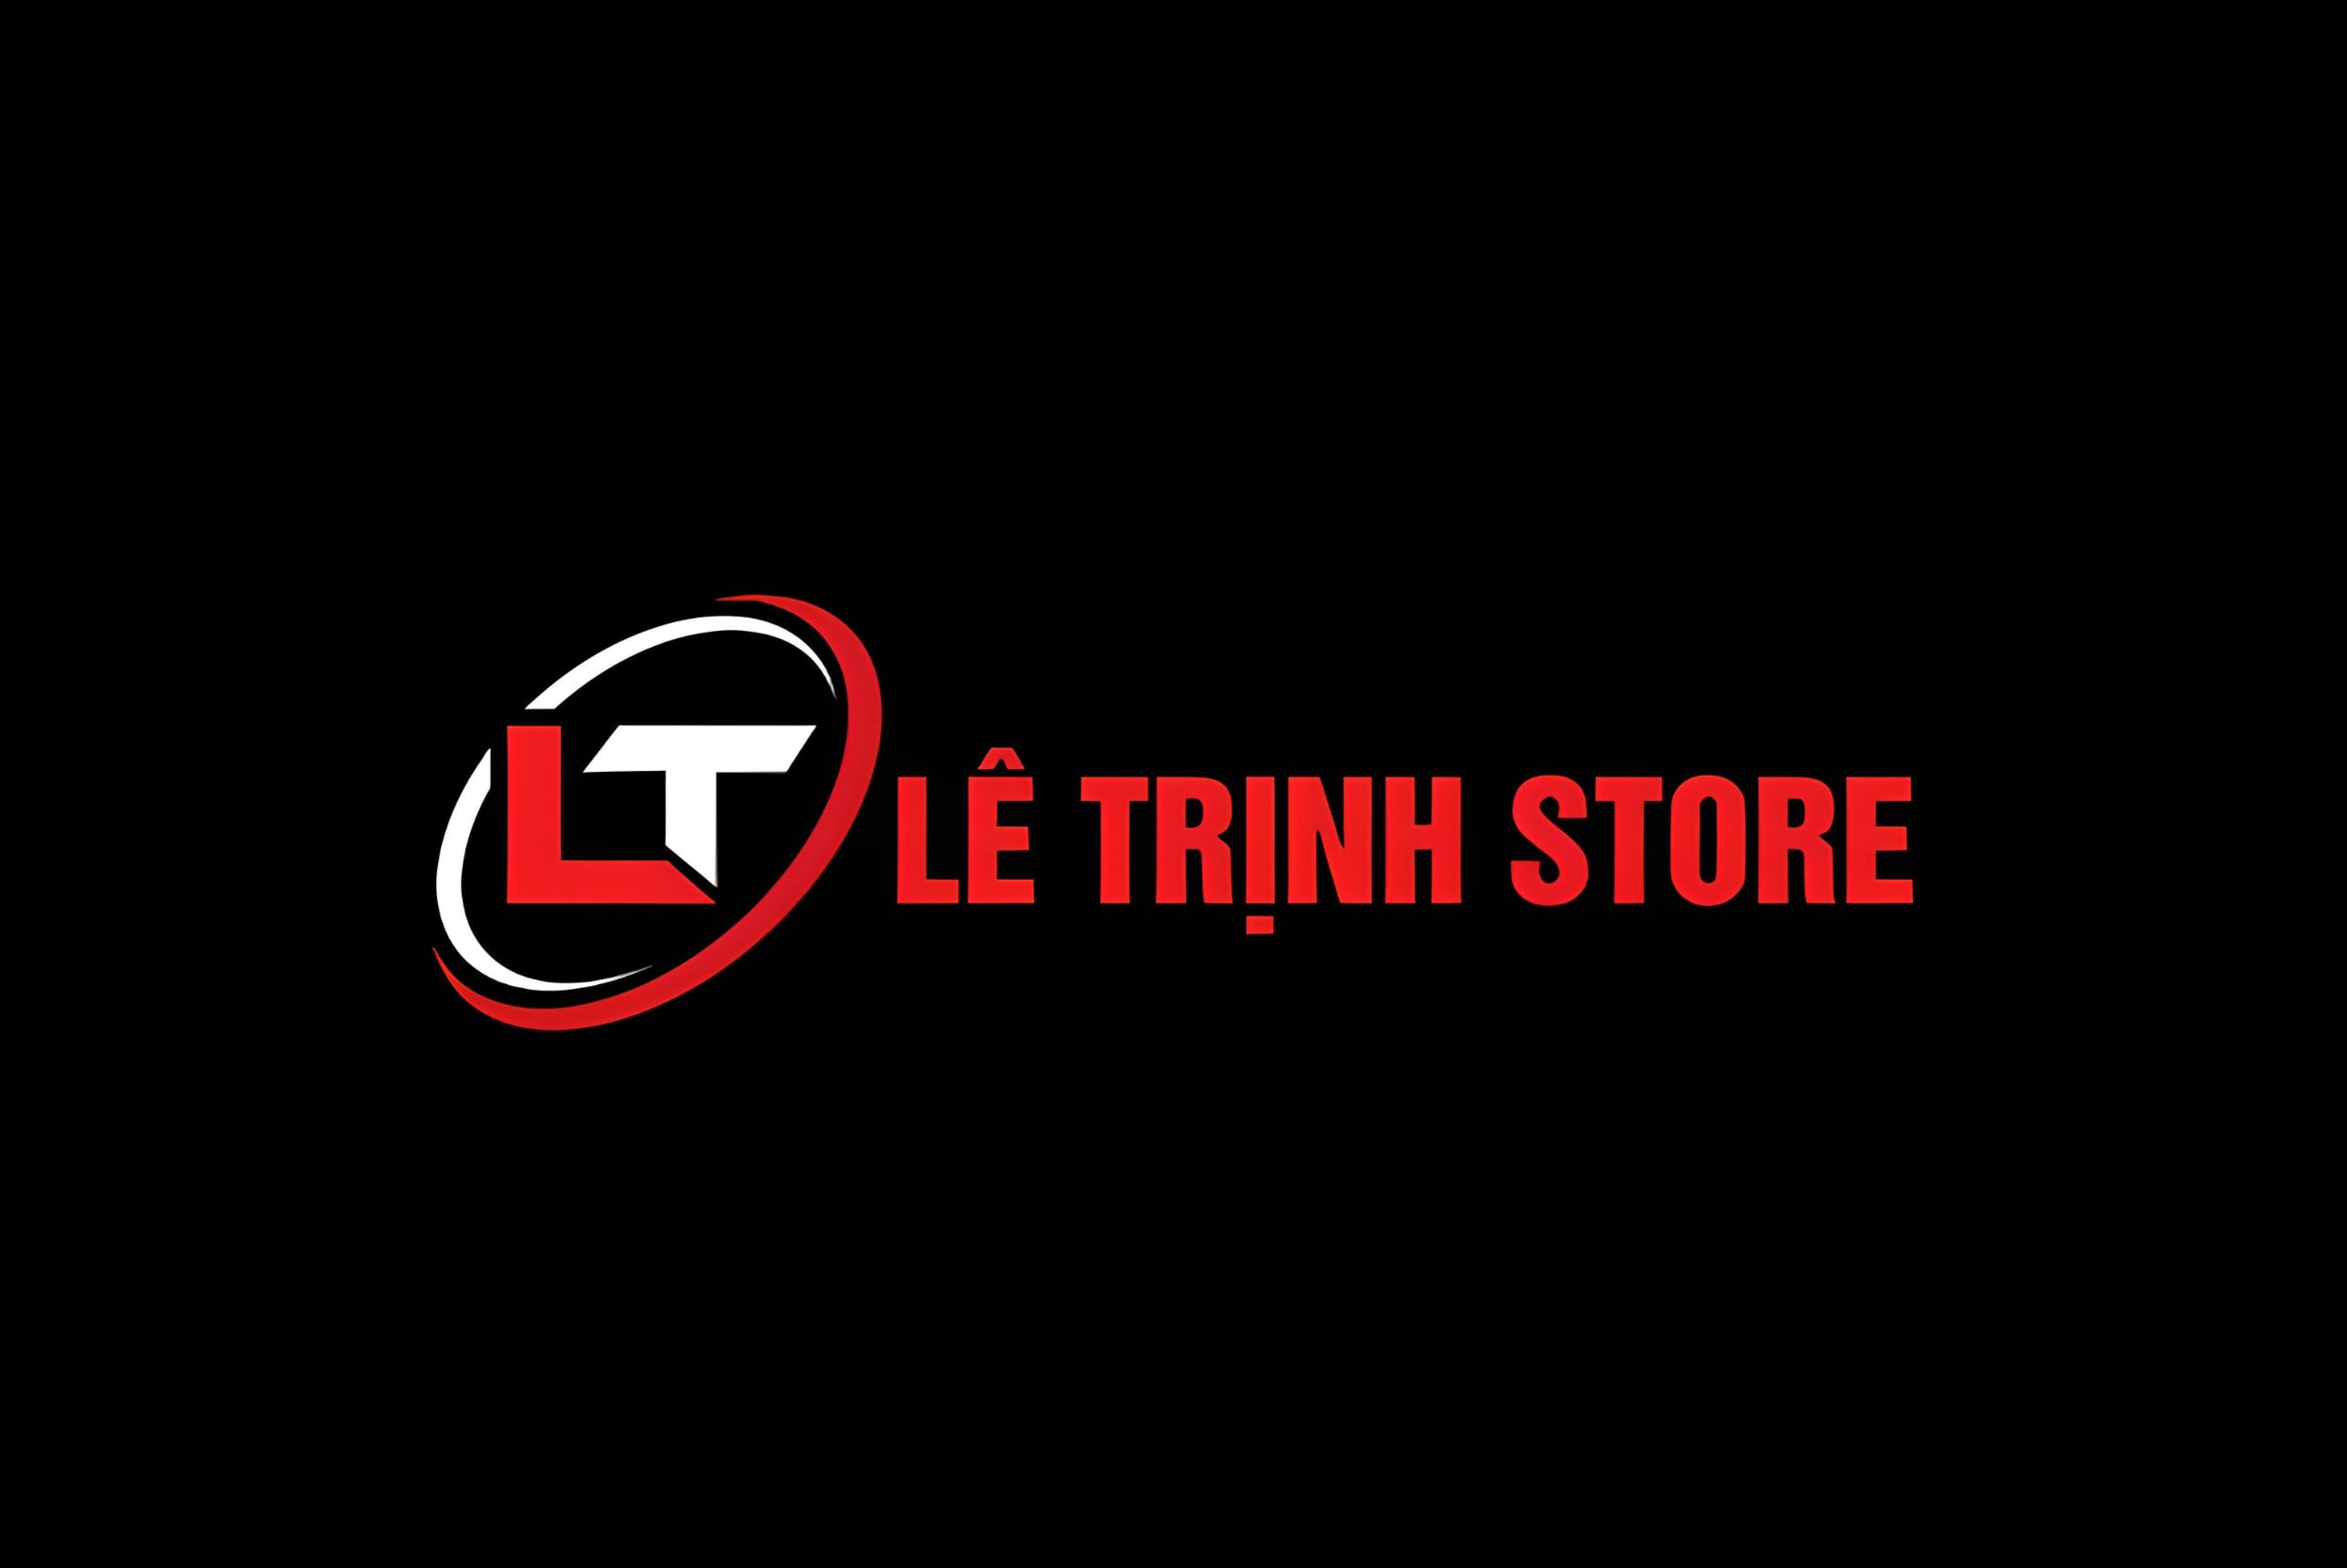 Le-trinh-store-logo